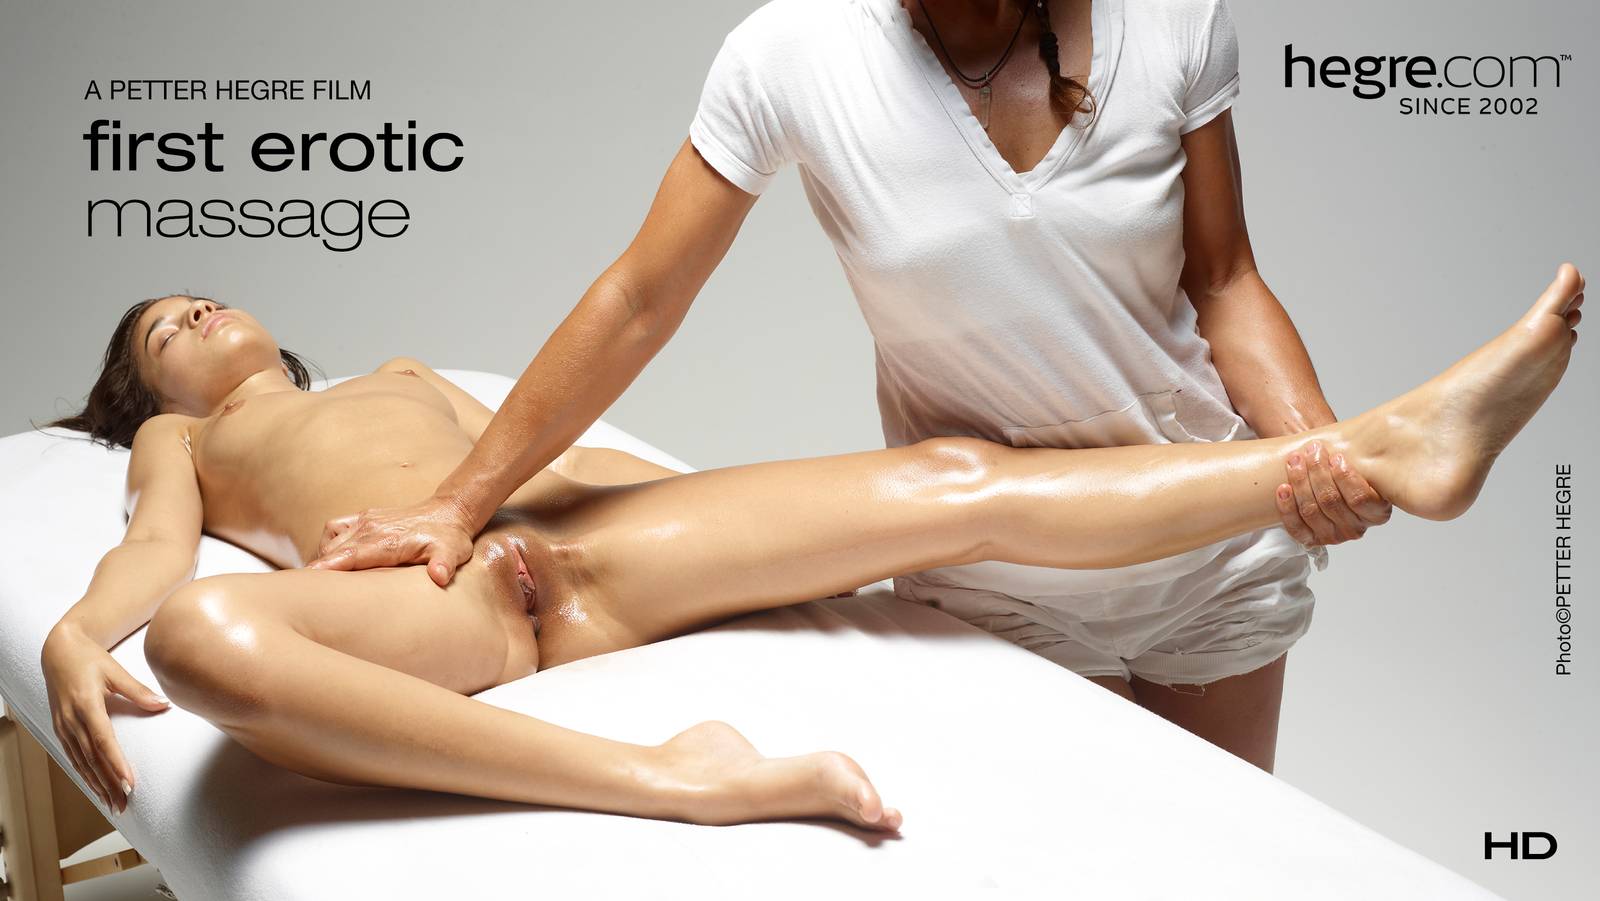 My First Erotic Massage